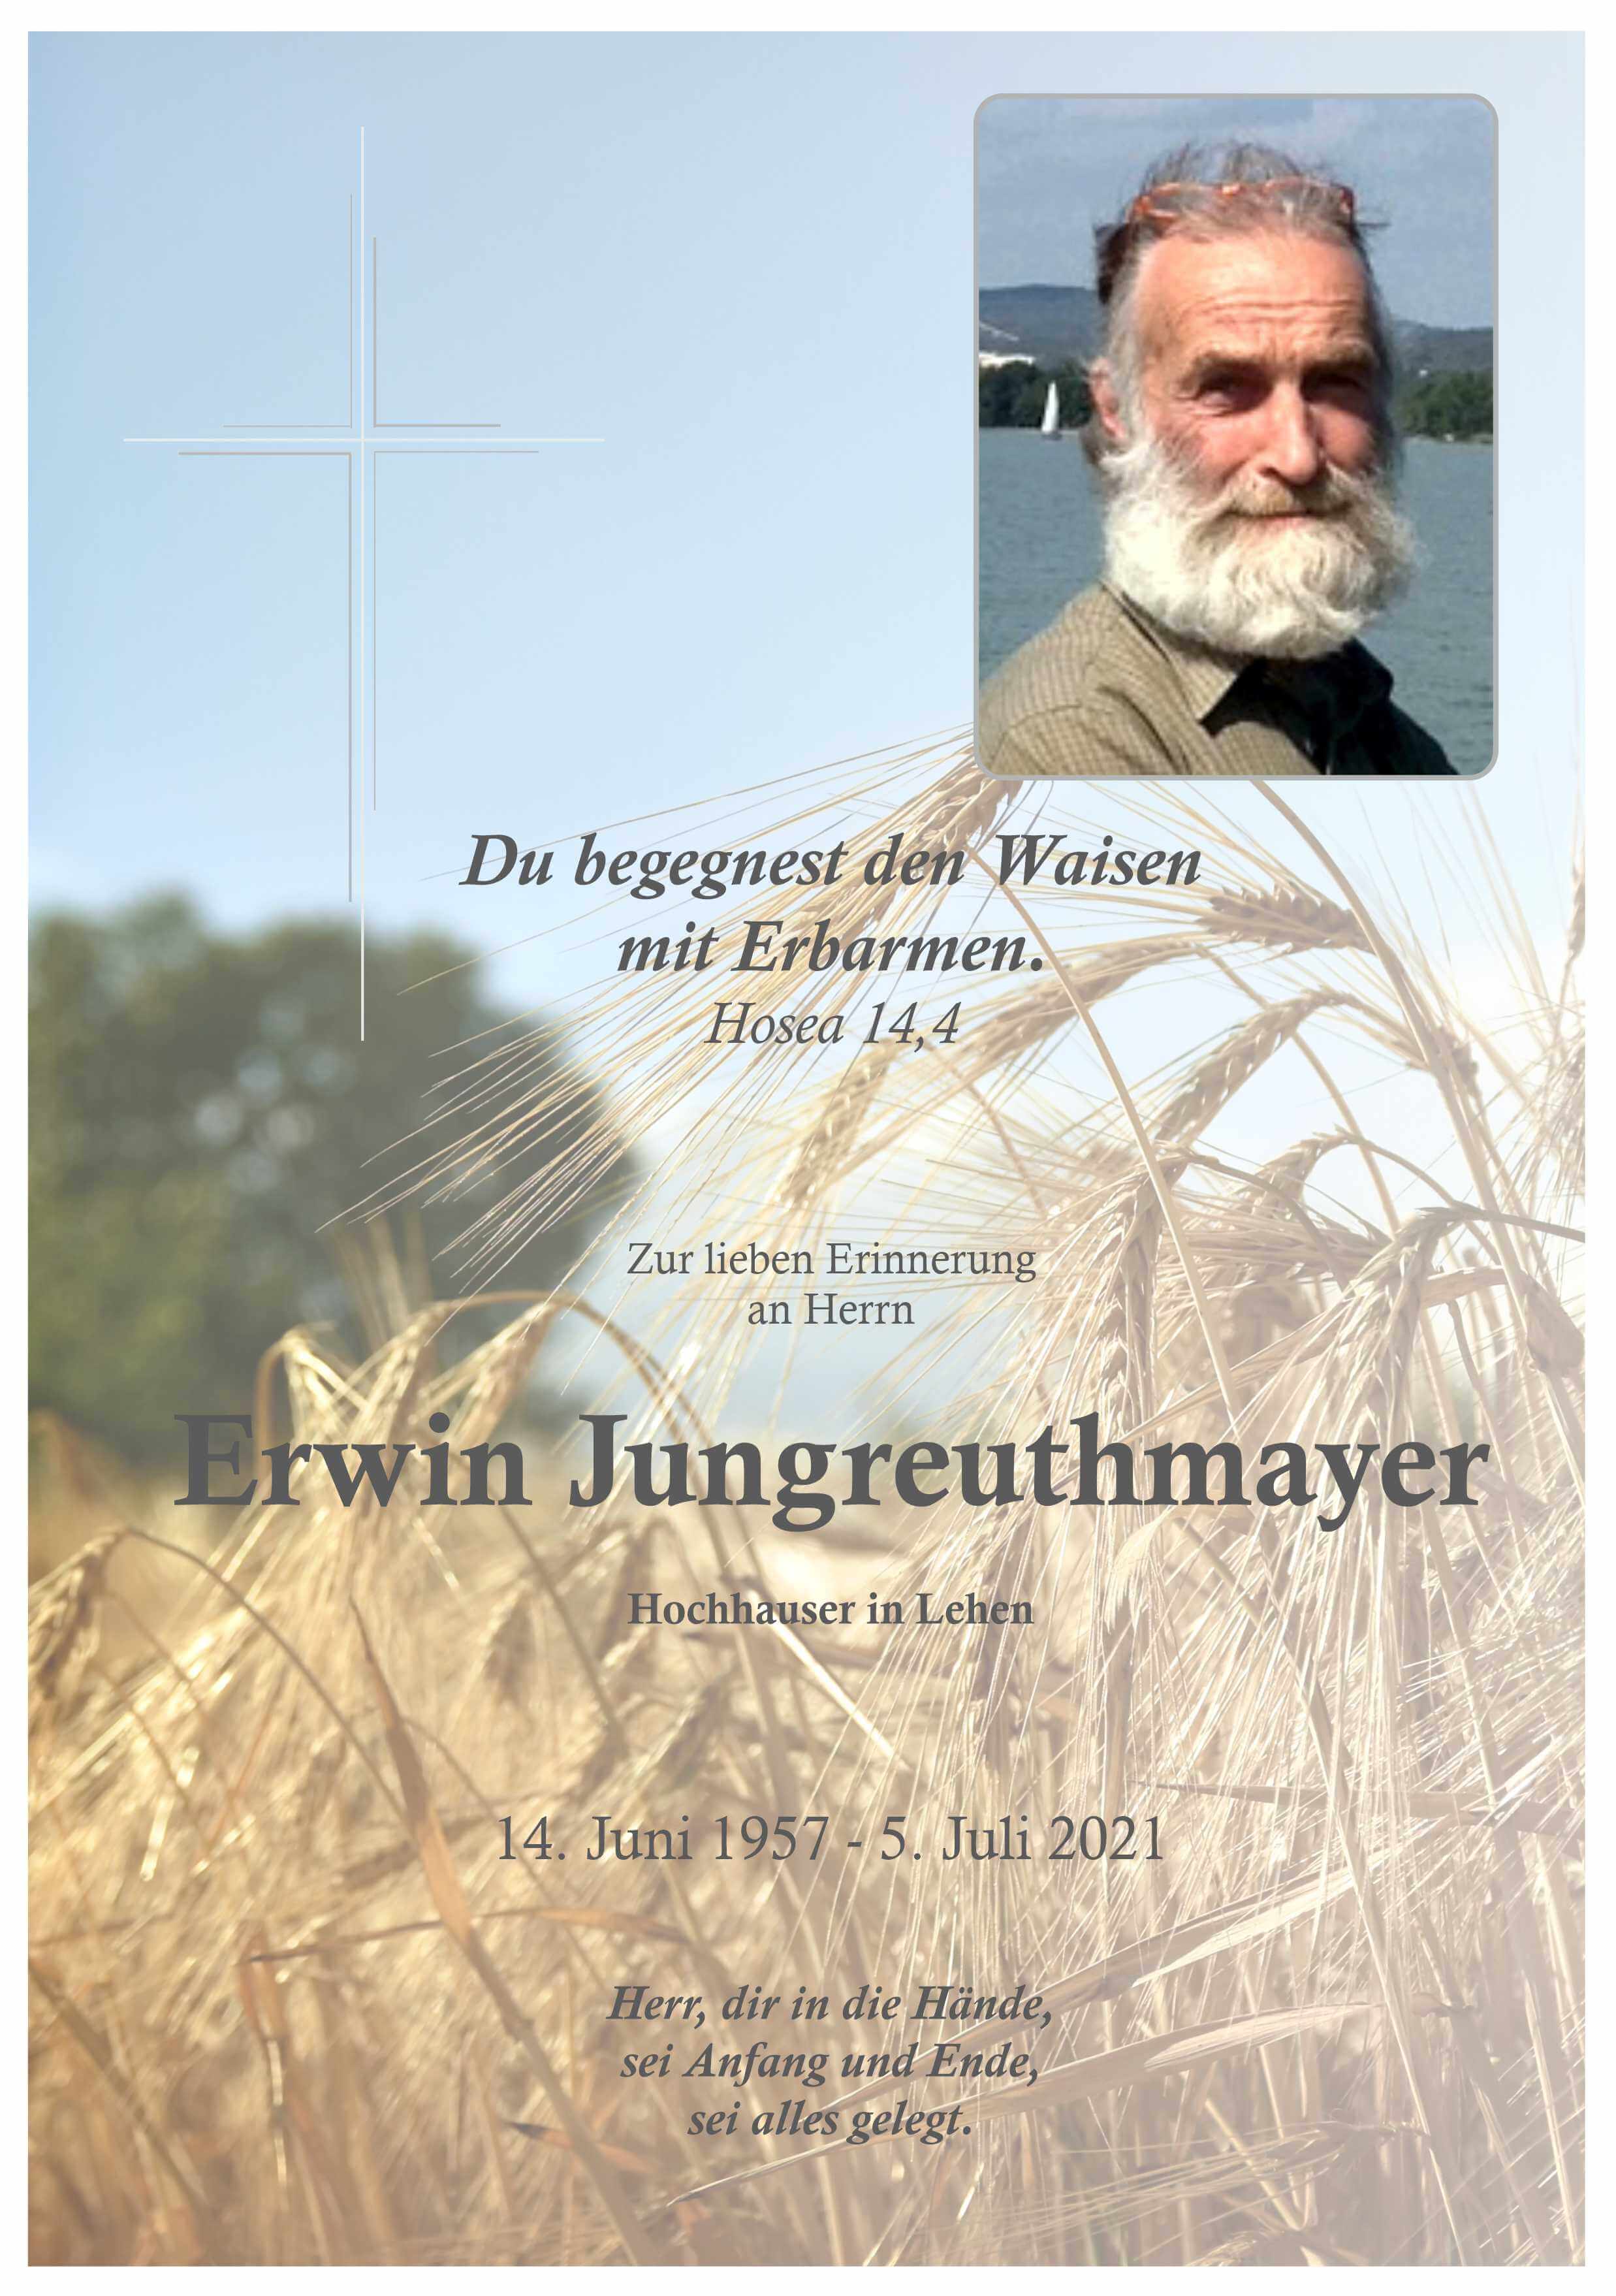 Erwin Jungreuthmayer (Scharten Evang)